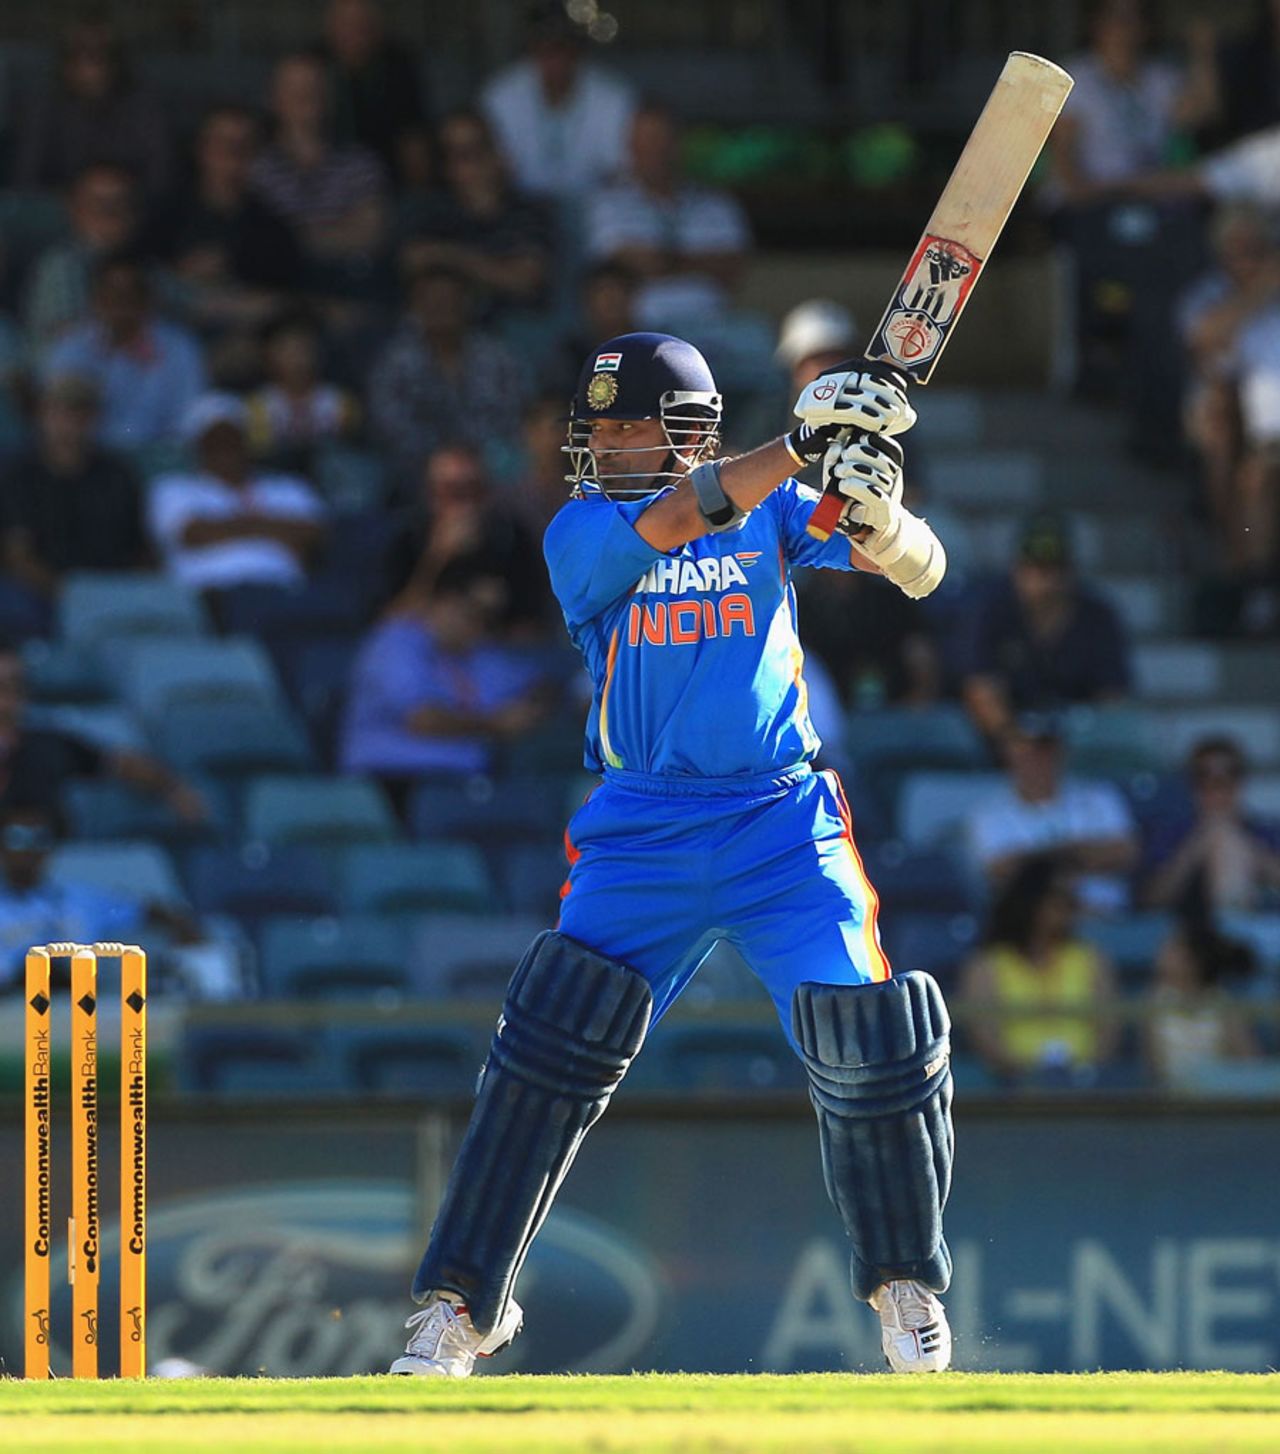 Sachin Tendulkar cuts powerfully, India v Sri Lanka, CB Series, 2nd ODI, Perth, February 8, 2012